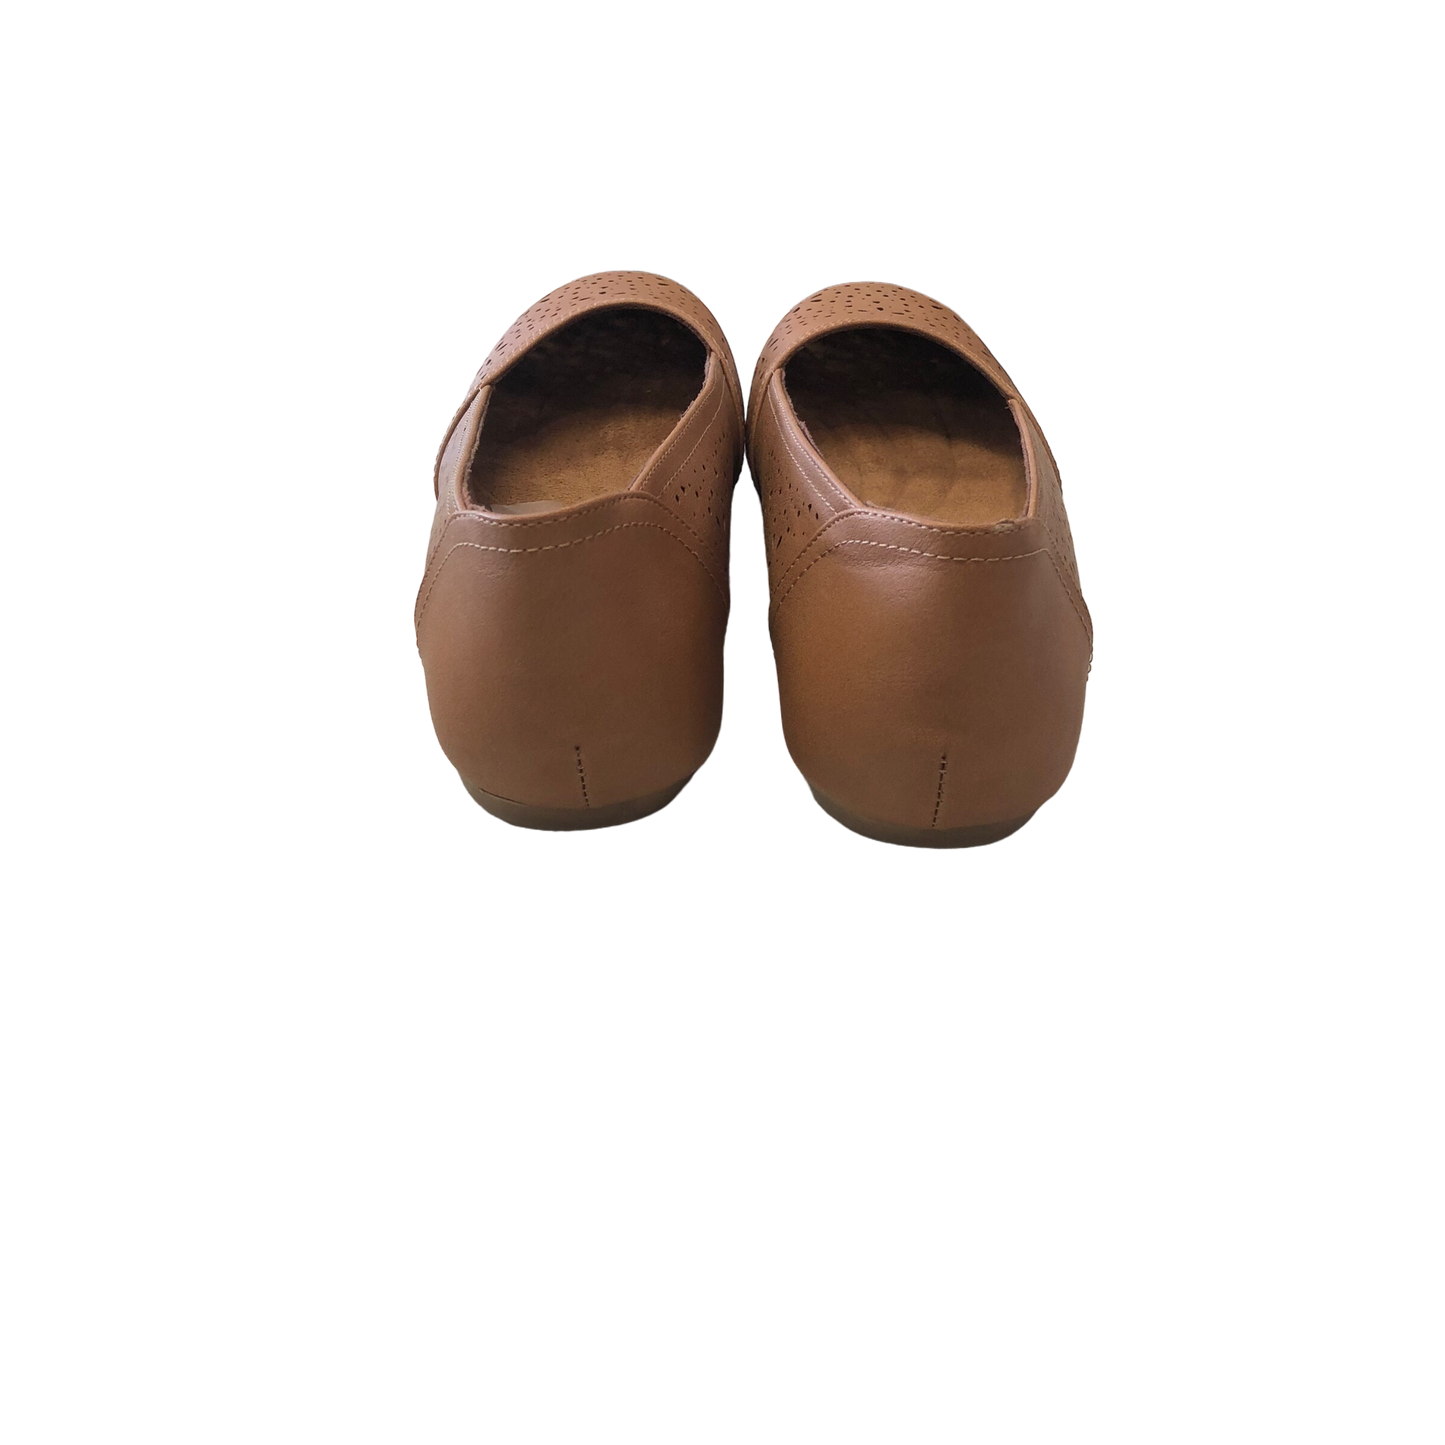 Tan Shoes Flats Ballet Easy Street, Size 7